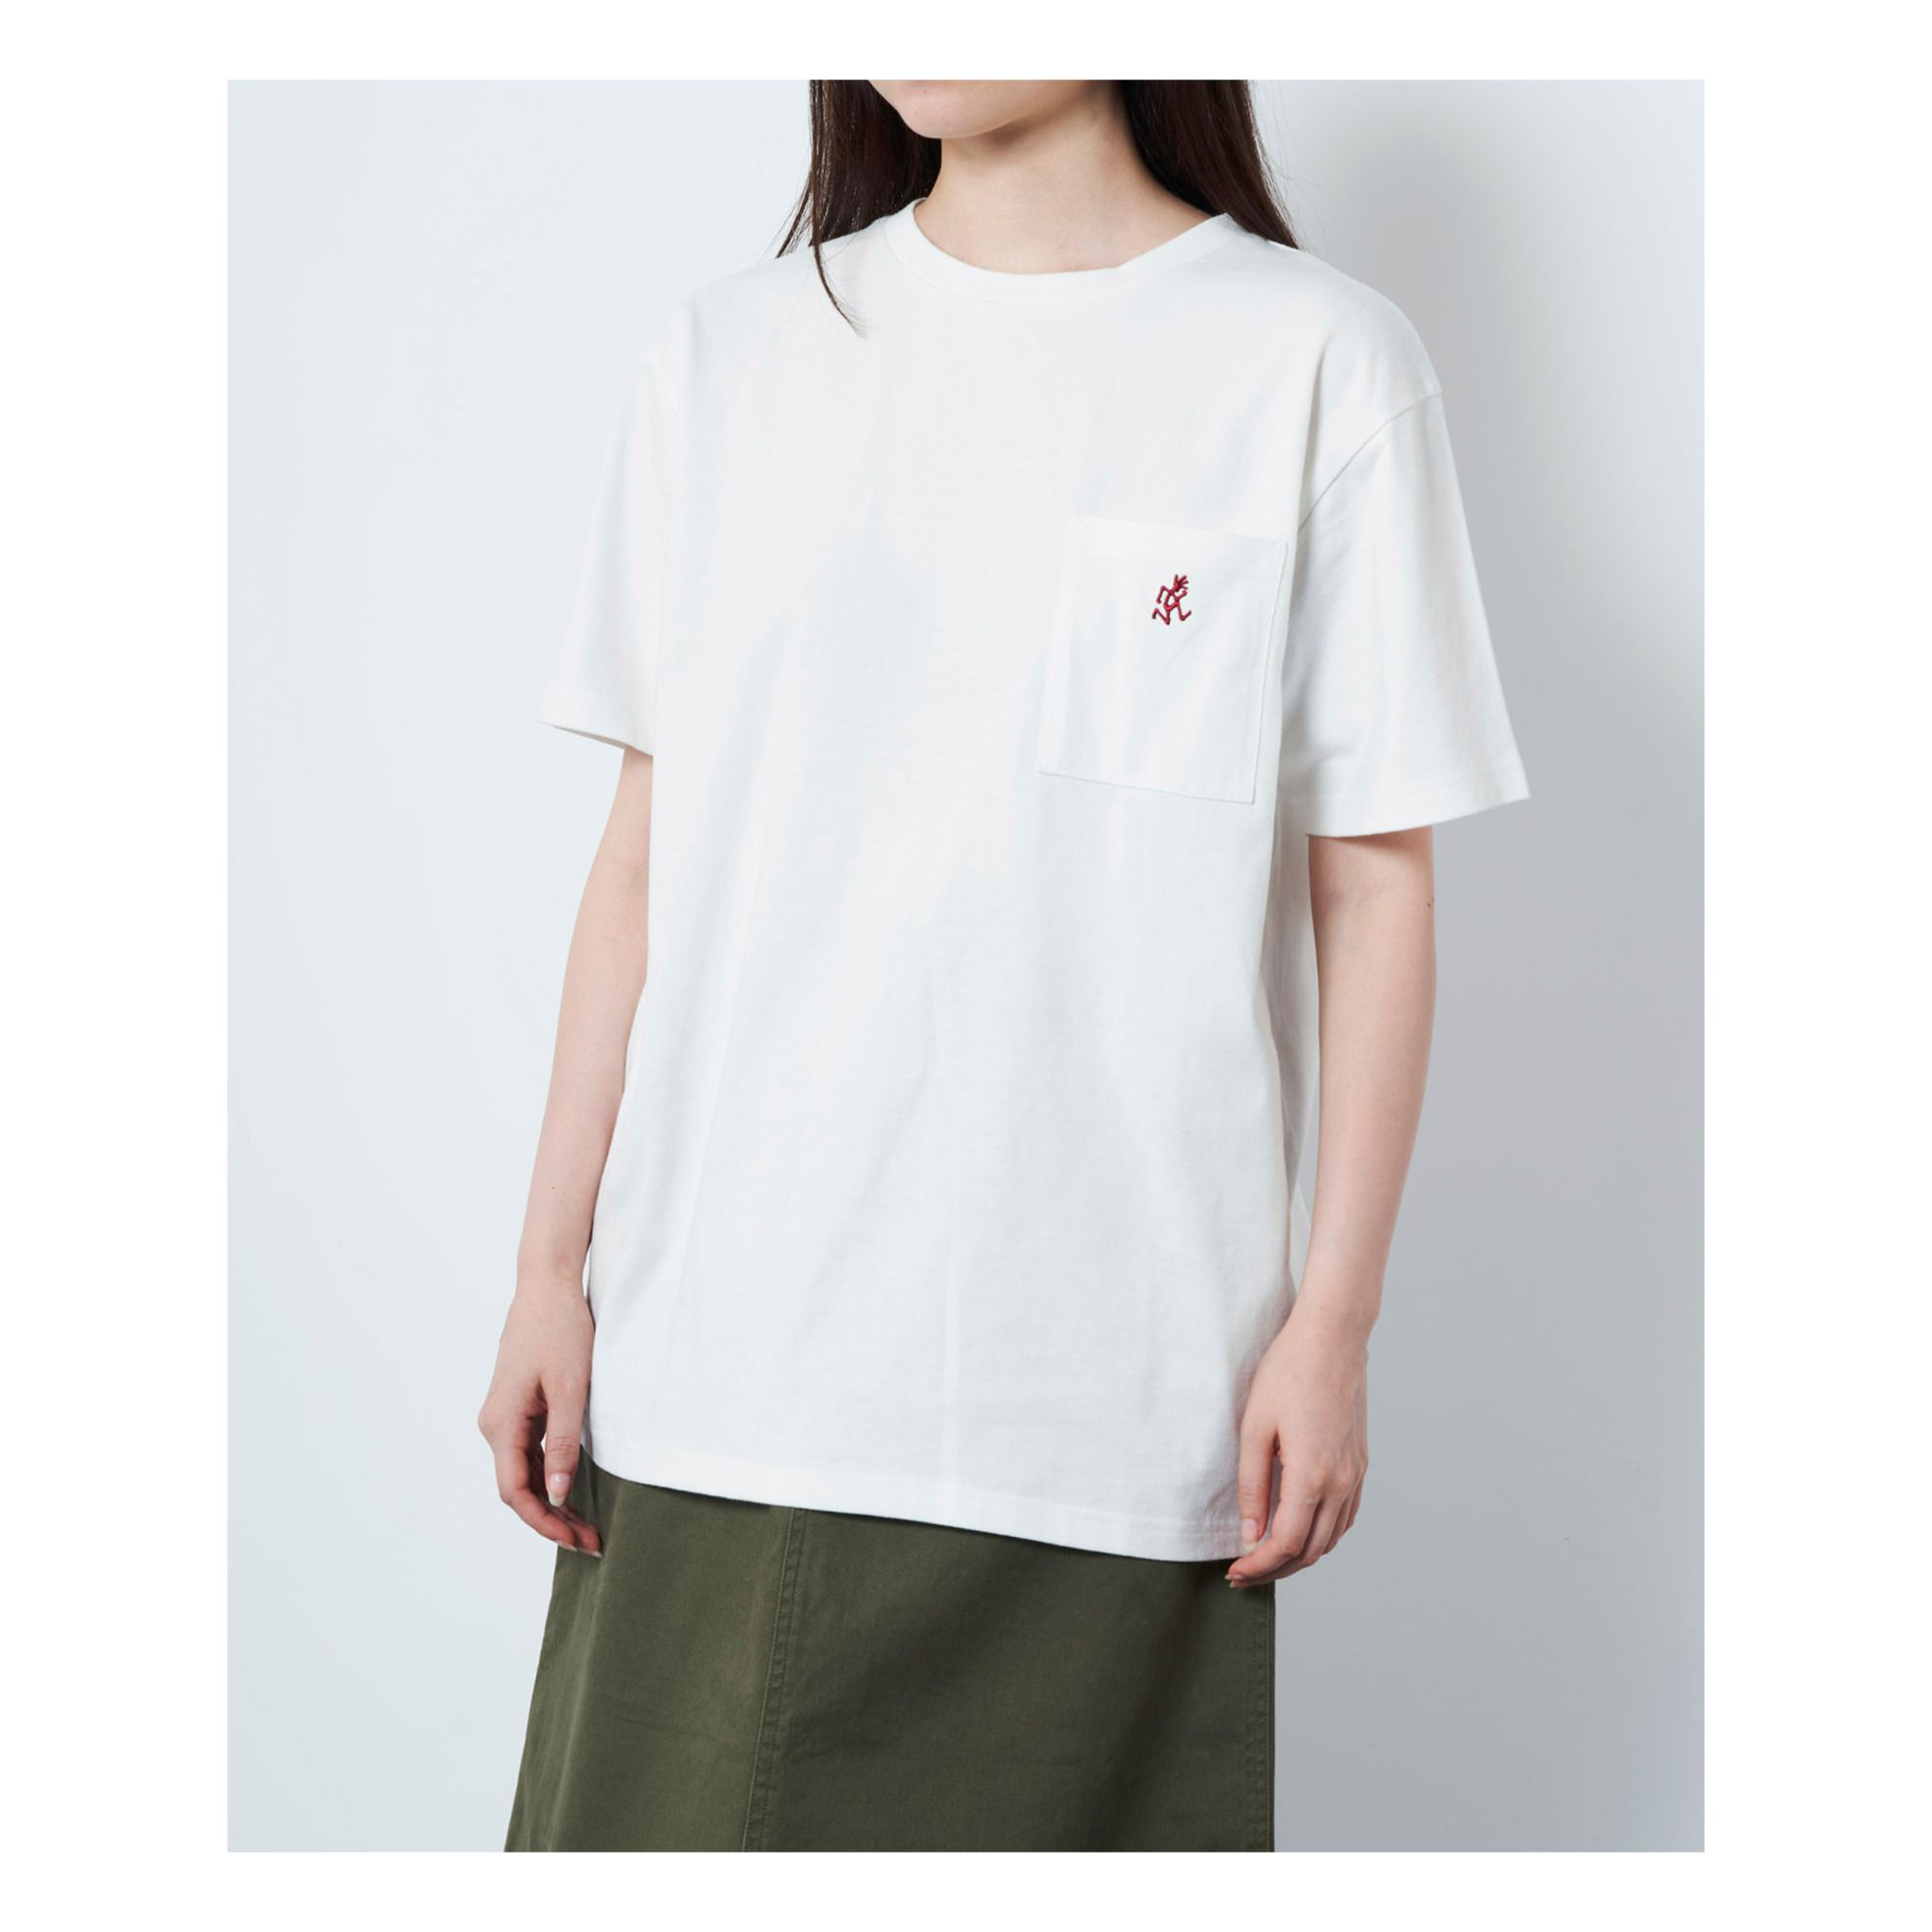 Gramicci - T-shirt Poche - Femme - Blanc